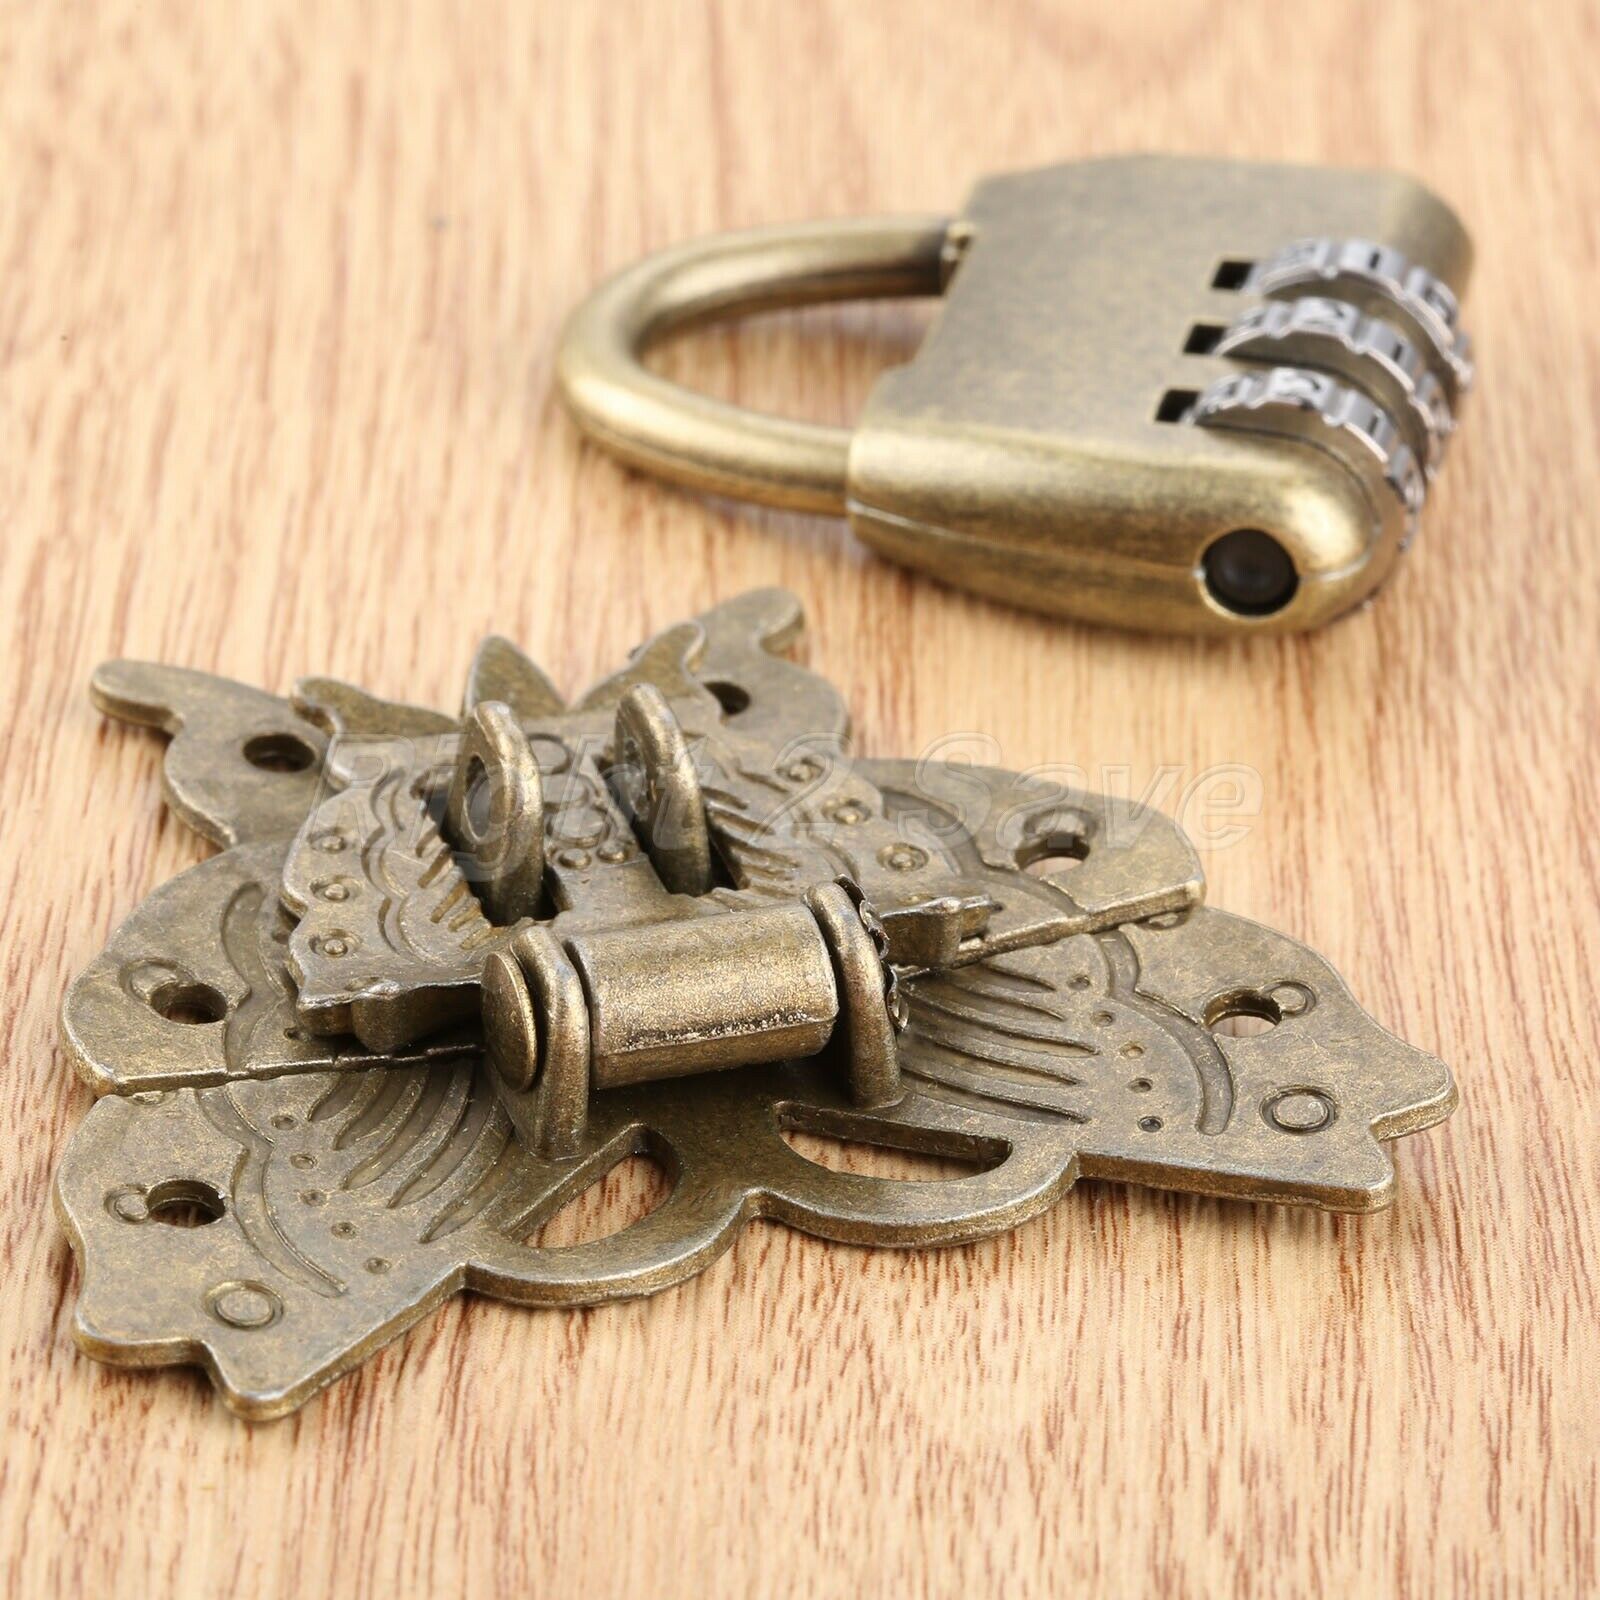 Zinc Alloy Password Padlock Lock Key with Butterfly Jewelry Box Latch Clasp Set